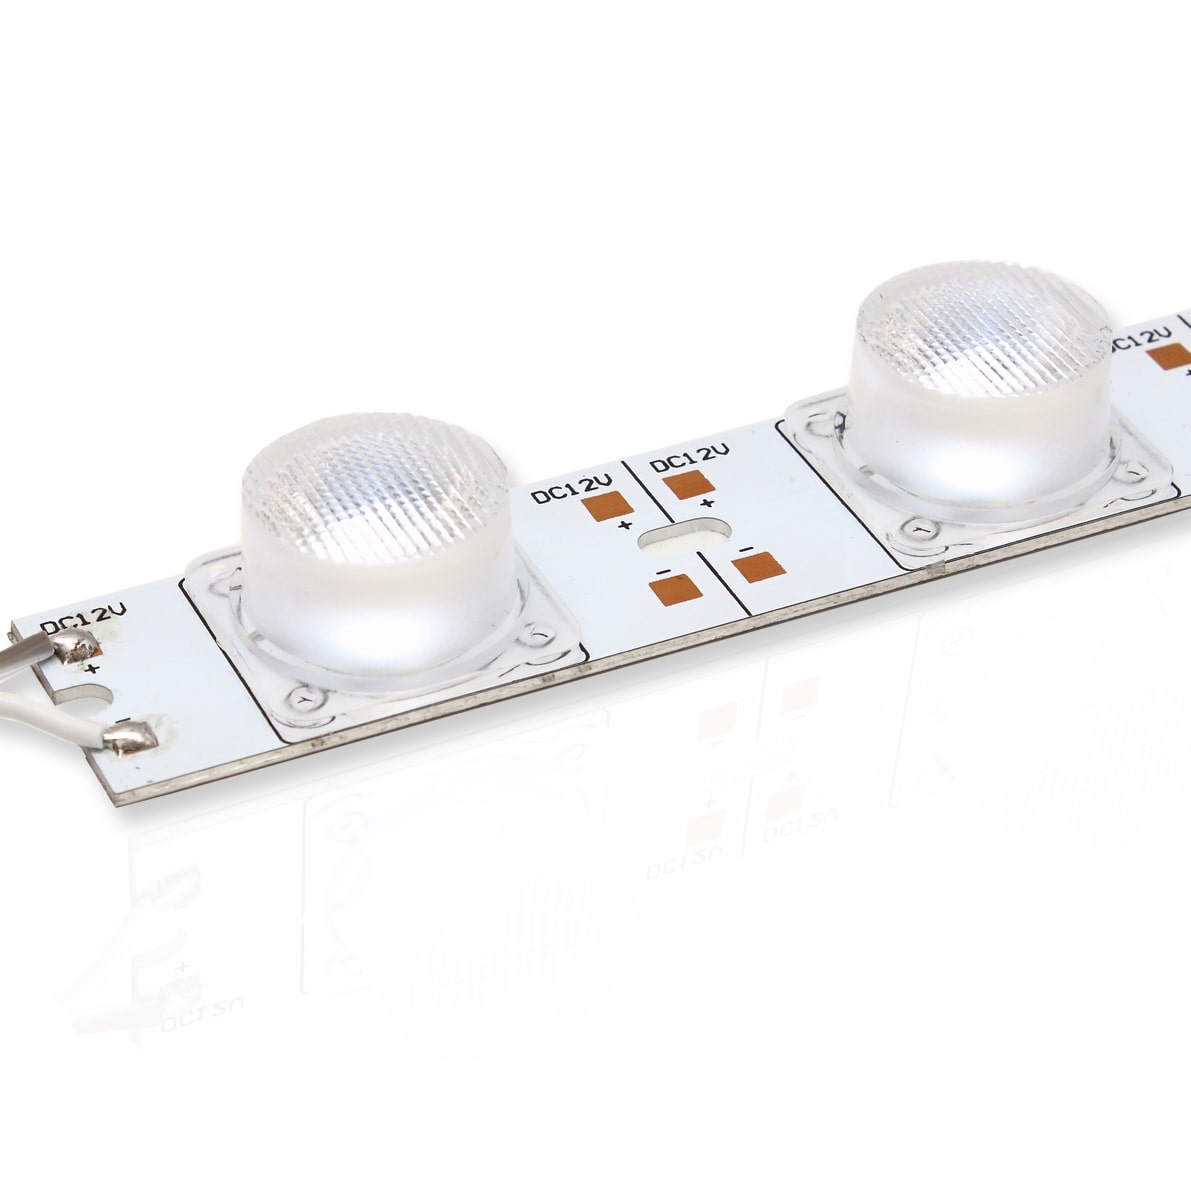 Герметичные светодиодные модули Светодиодный модуль 3030 18 led MOD48 (12V, 18W, cool white)